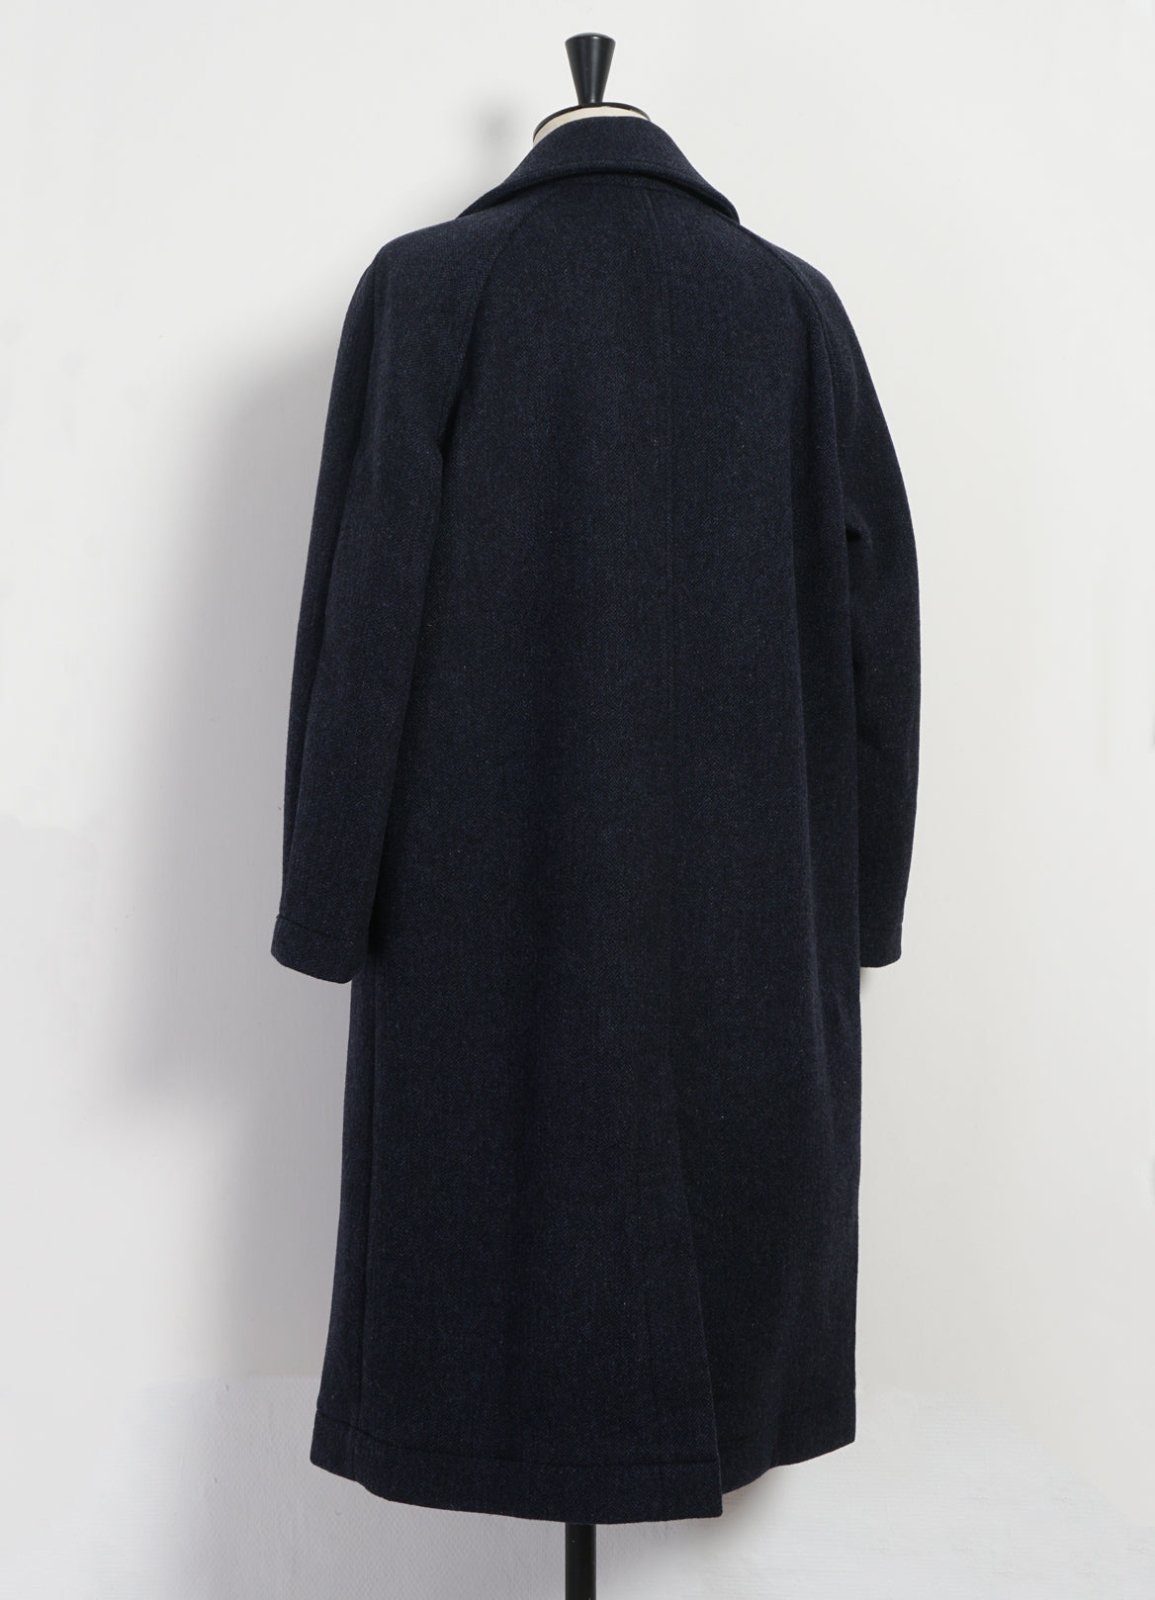 HANSEN GARMENTS - SIGFRED | Long Double Face Wool Coat | Blue Herringbone - HANSEN Garments